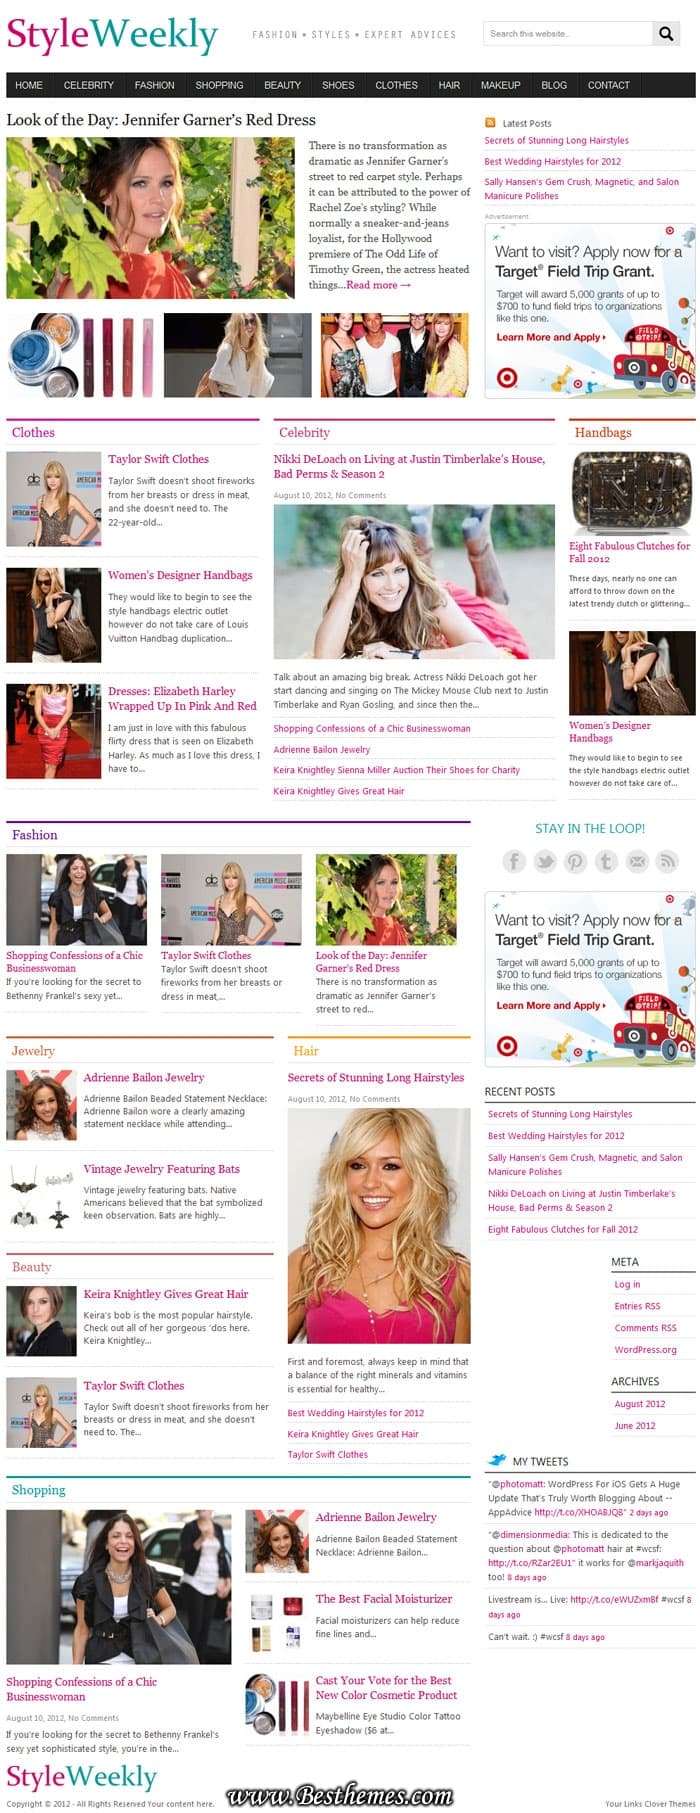 StyleWeekly Premium WordPress Theme from Clover Themes. Best Fashion Magazine WP Theme, Best Celebrity Gossip WP Theme